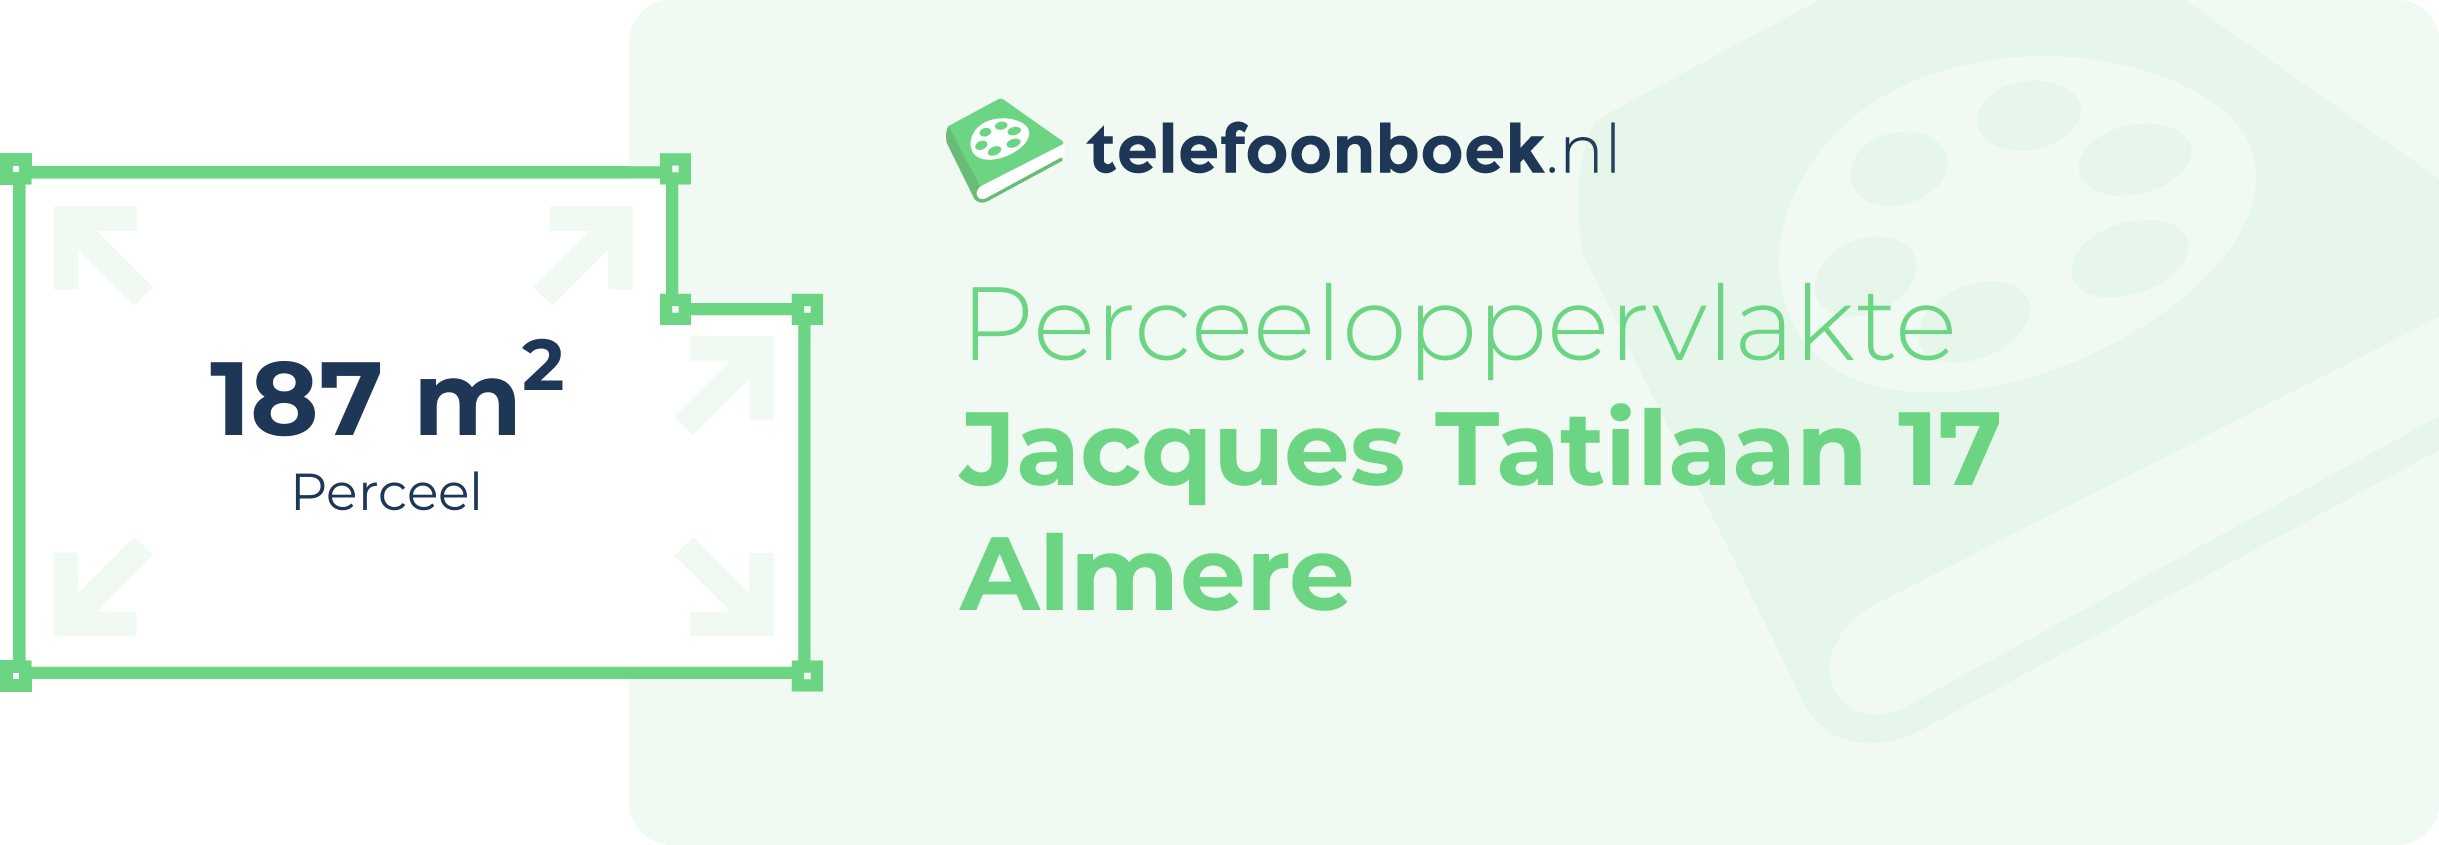 Perceeloppervlakte Jacques Tatilaan 17 Almere